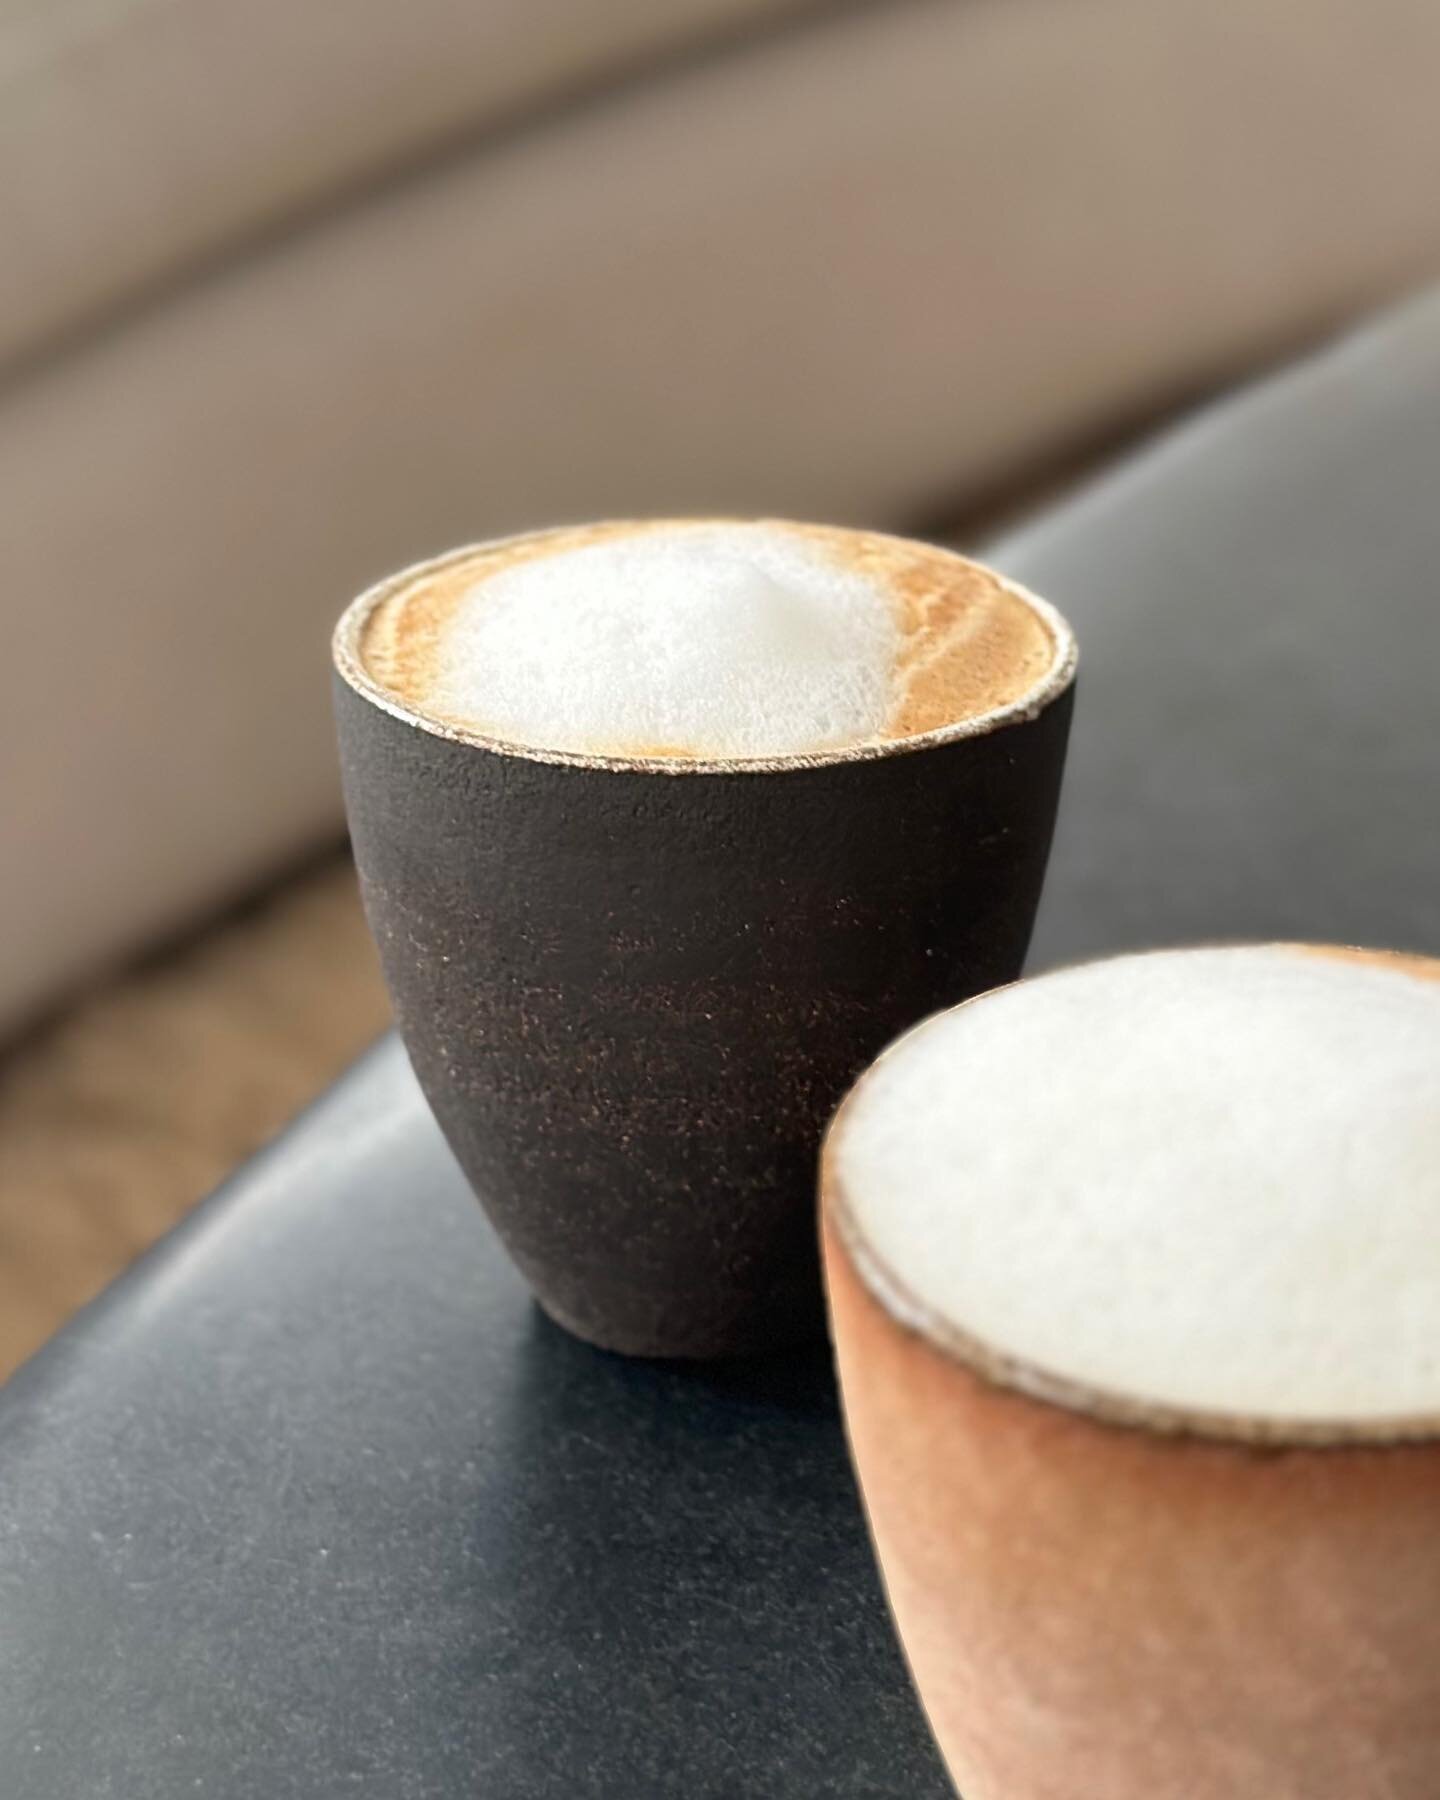 Canggu and Crystal cups available online 

#ceramicsmim #mallorca #pottery #potterystudio #wheelthrown #wheelthrownpottery #wheeltbrownceramics #ceramica #coffee #coffeeculture #coffeecup #coffeemug #blackclay #mediterraneanstyle #mediterraneanlife #